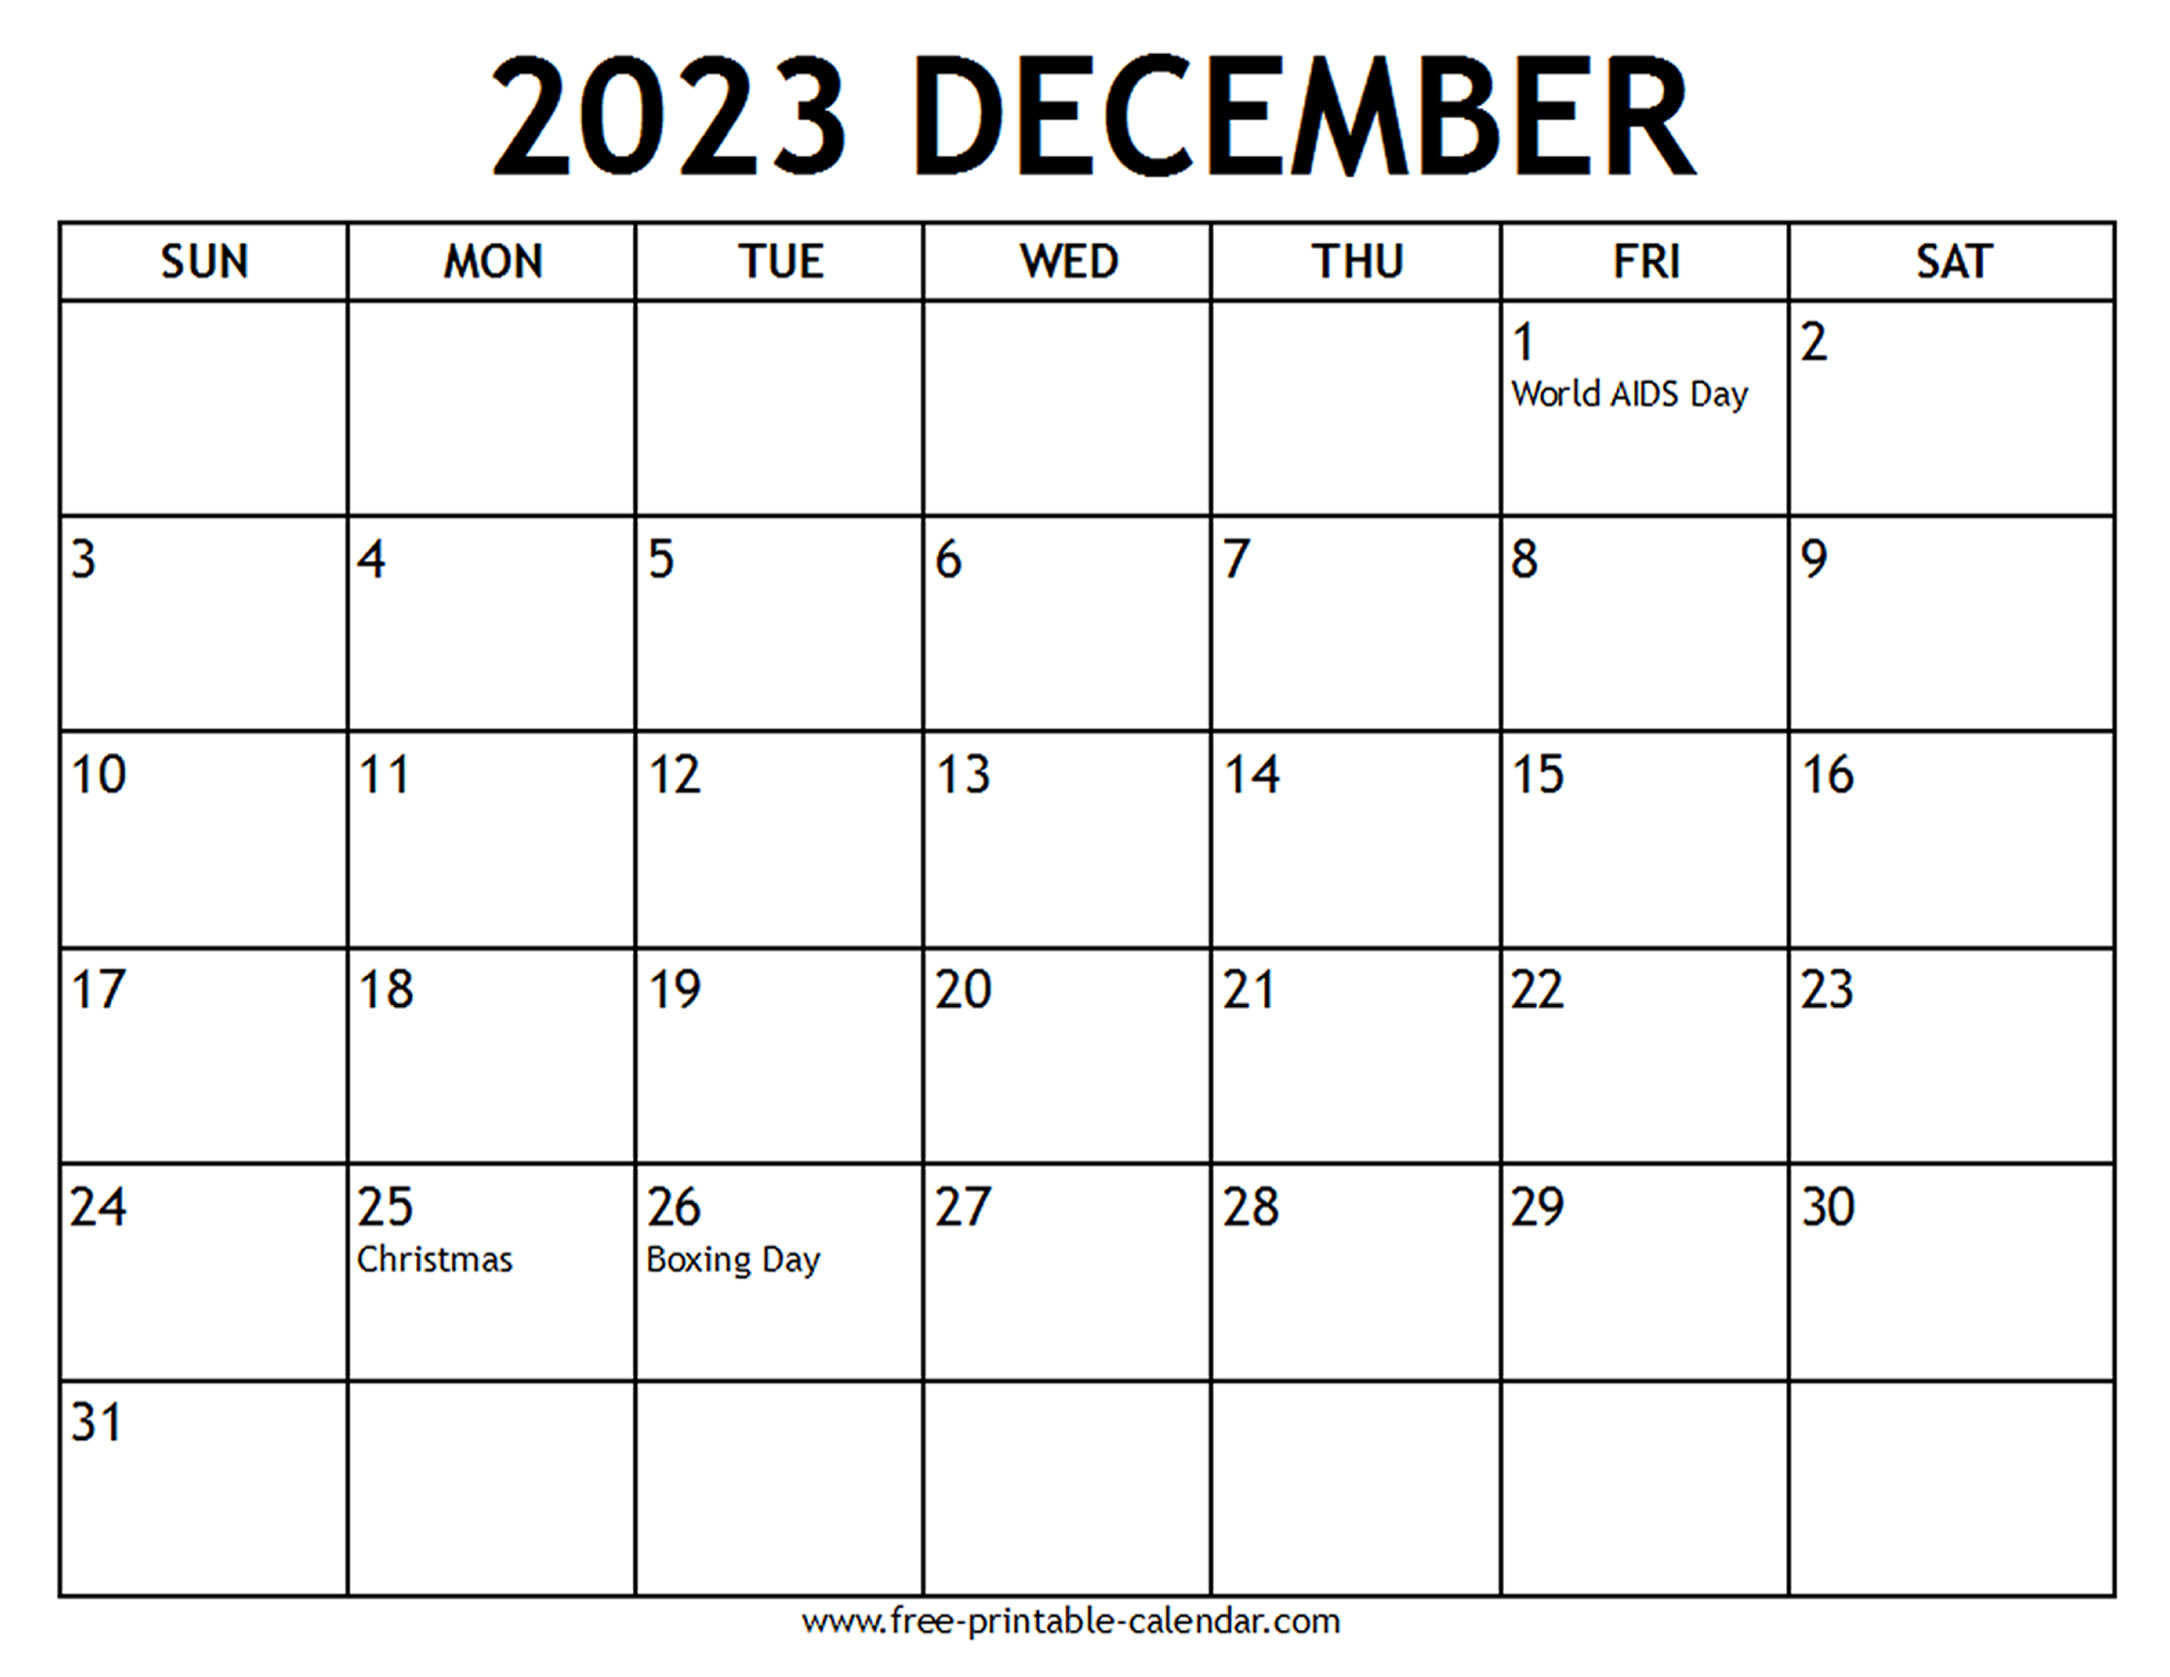 Dec 2023 Calendar Printable Free